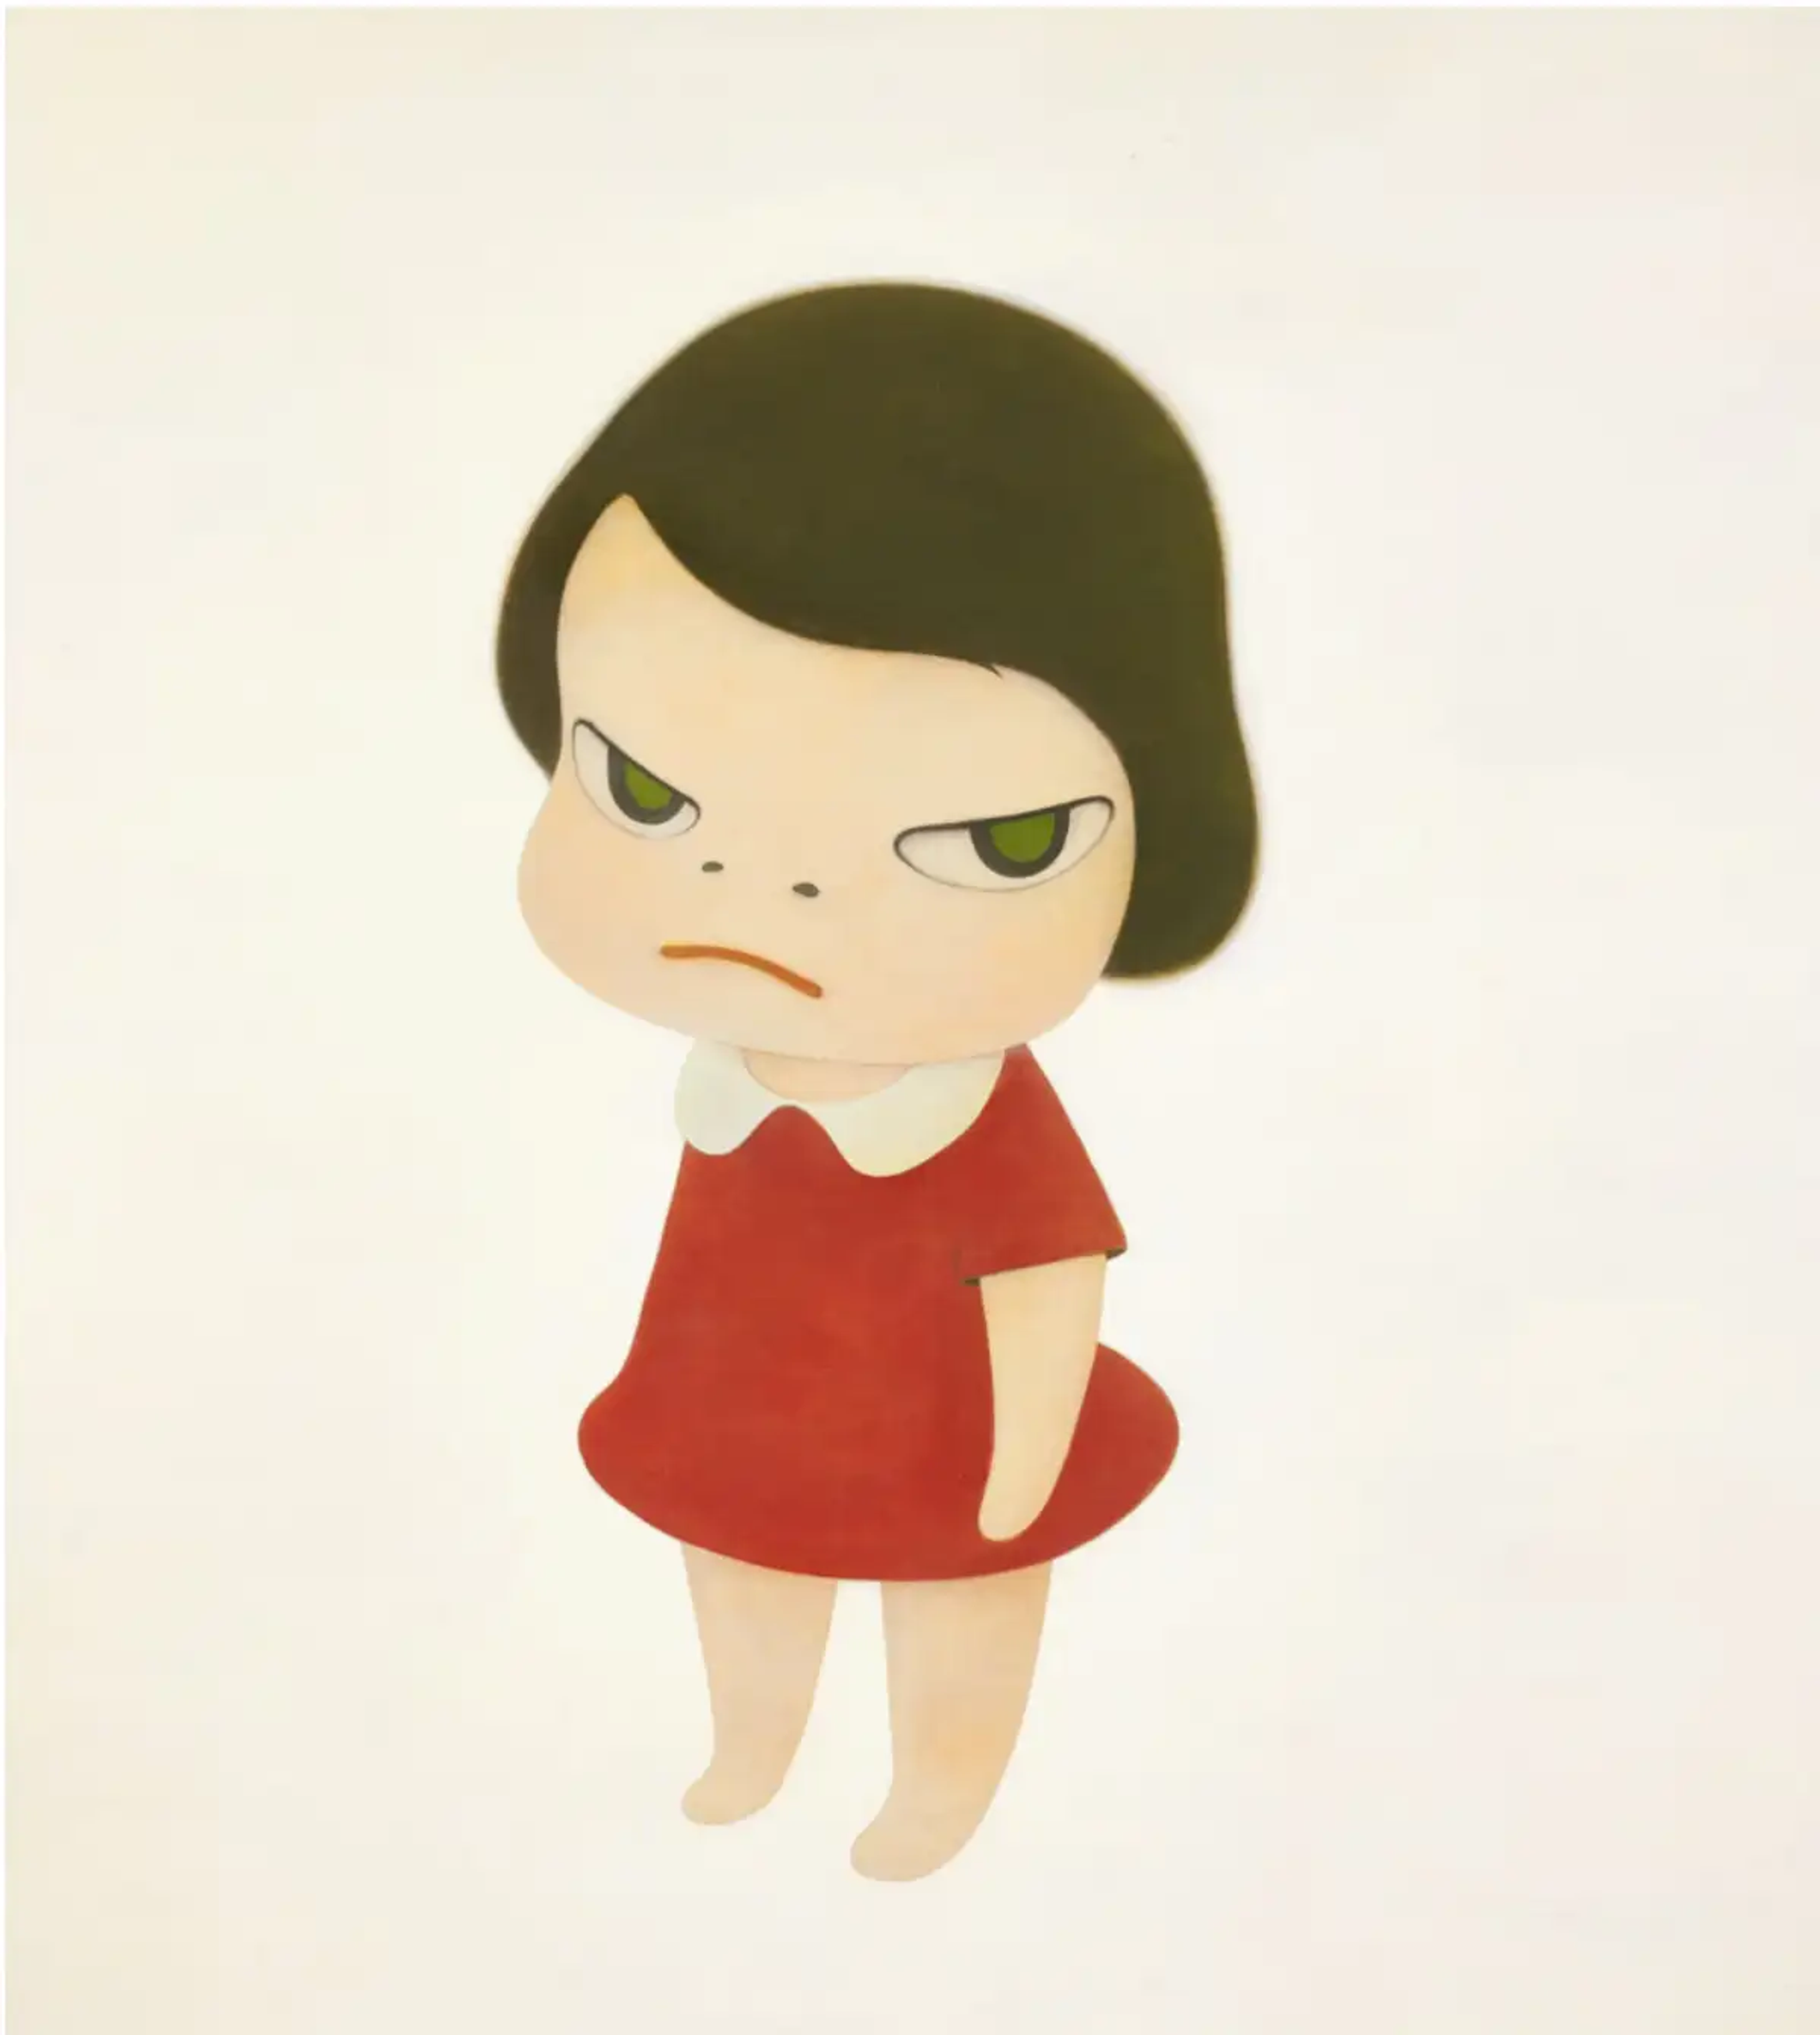 Yoshitomo Nara’s Knife Behind Back: Girl in red dress with angry facial expressions